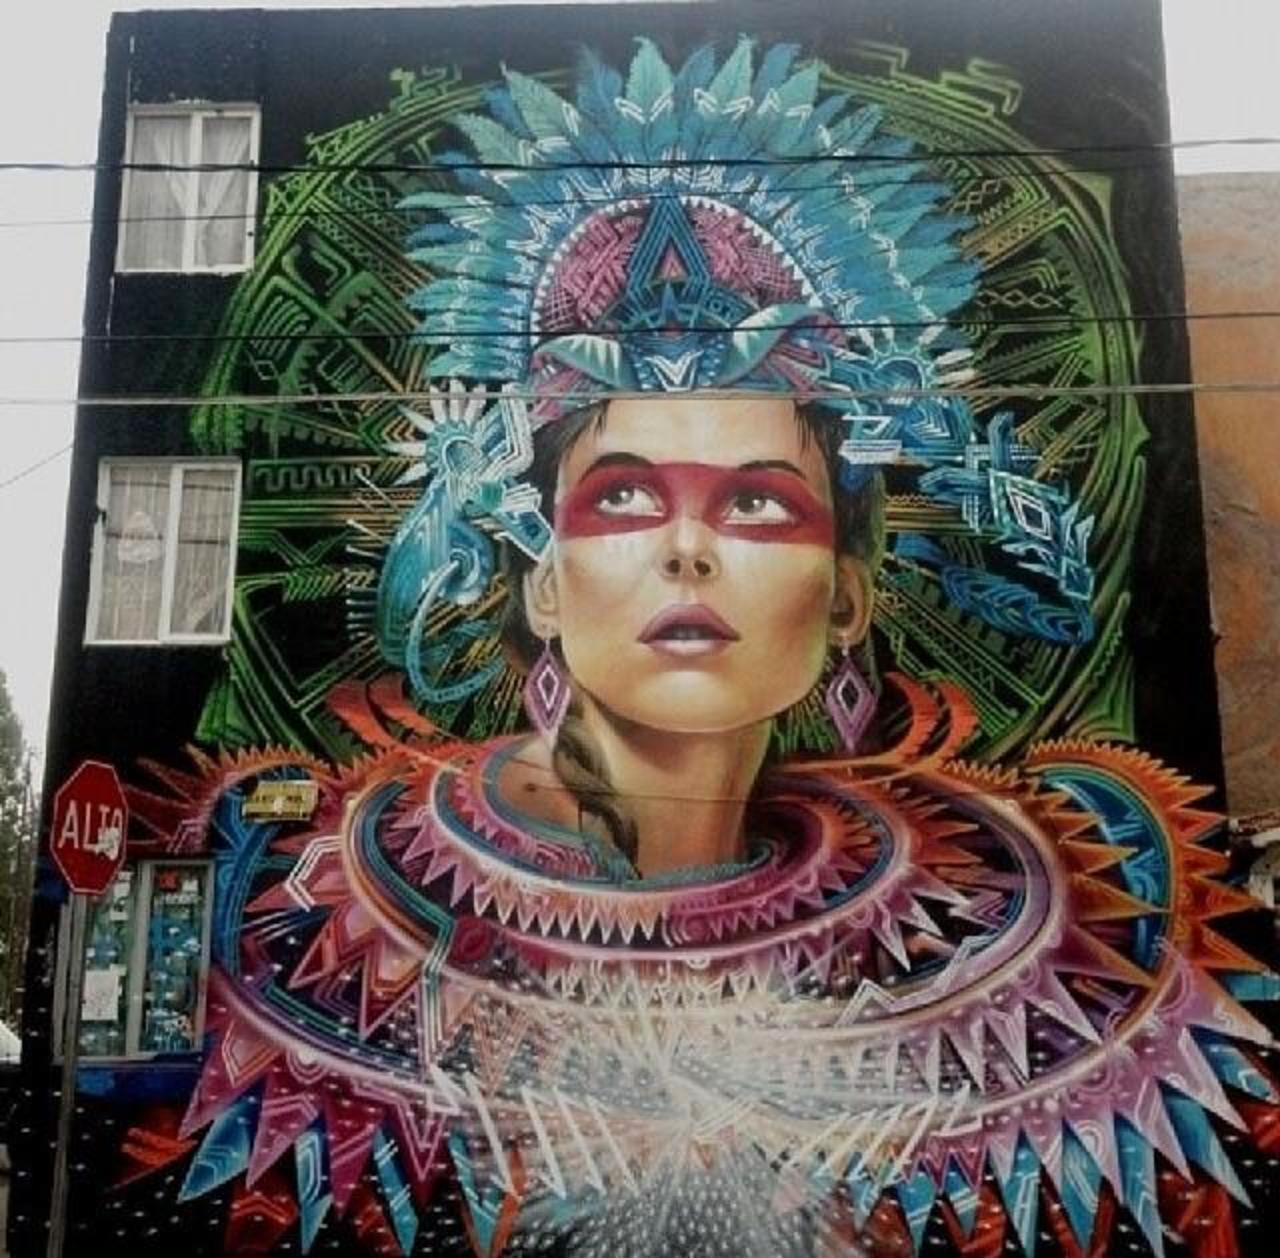 Artist 'Espectral Cauac Azul' glorious large scale Street Art in Mexico #art #graffiti #mural #streetart http://t.co/3lEO1LT3mN